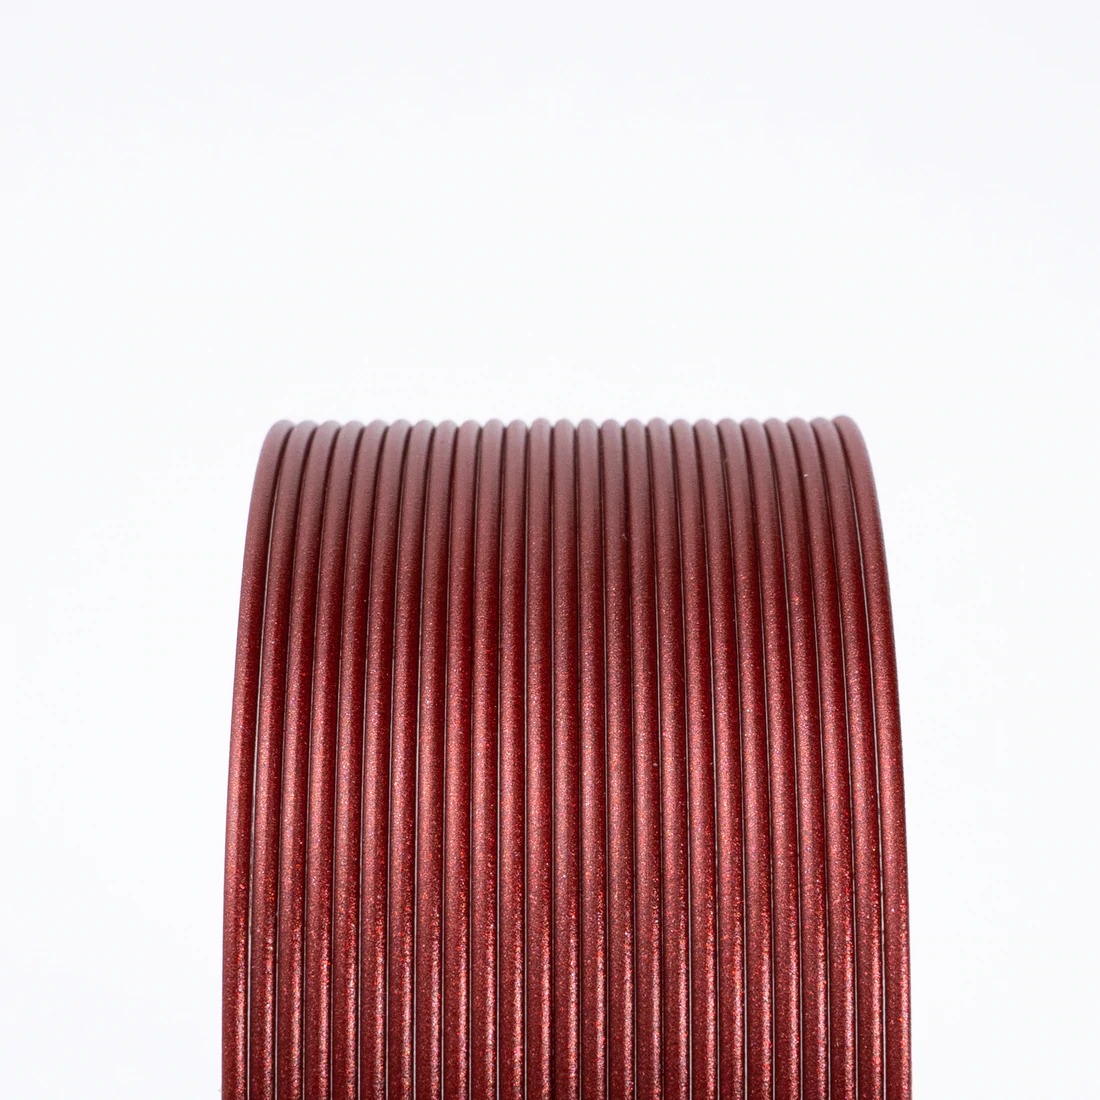 Candy Heartthrob Metallic Red HTPLA 1.75mm 3D printing filament